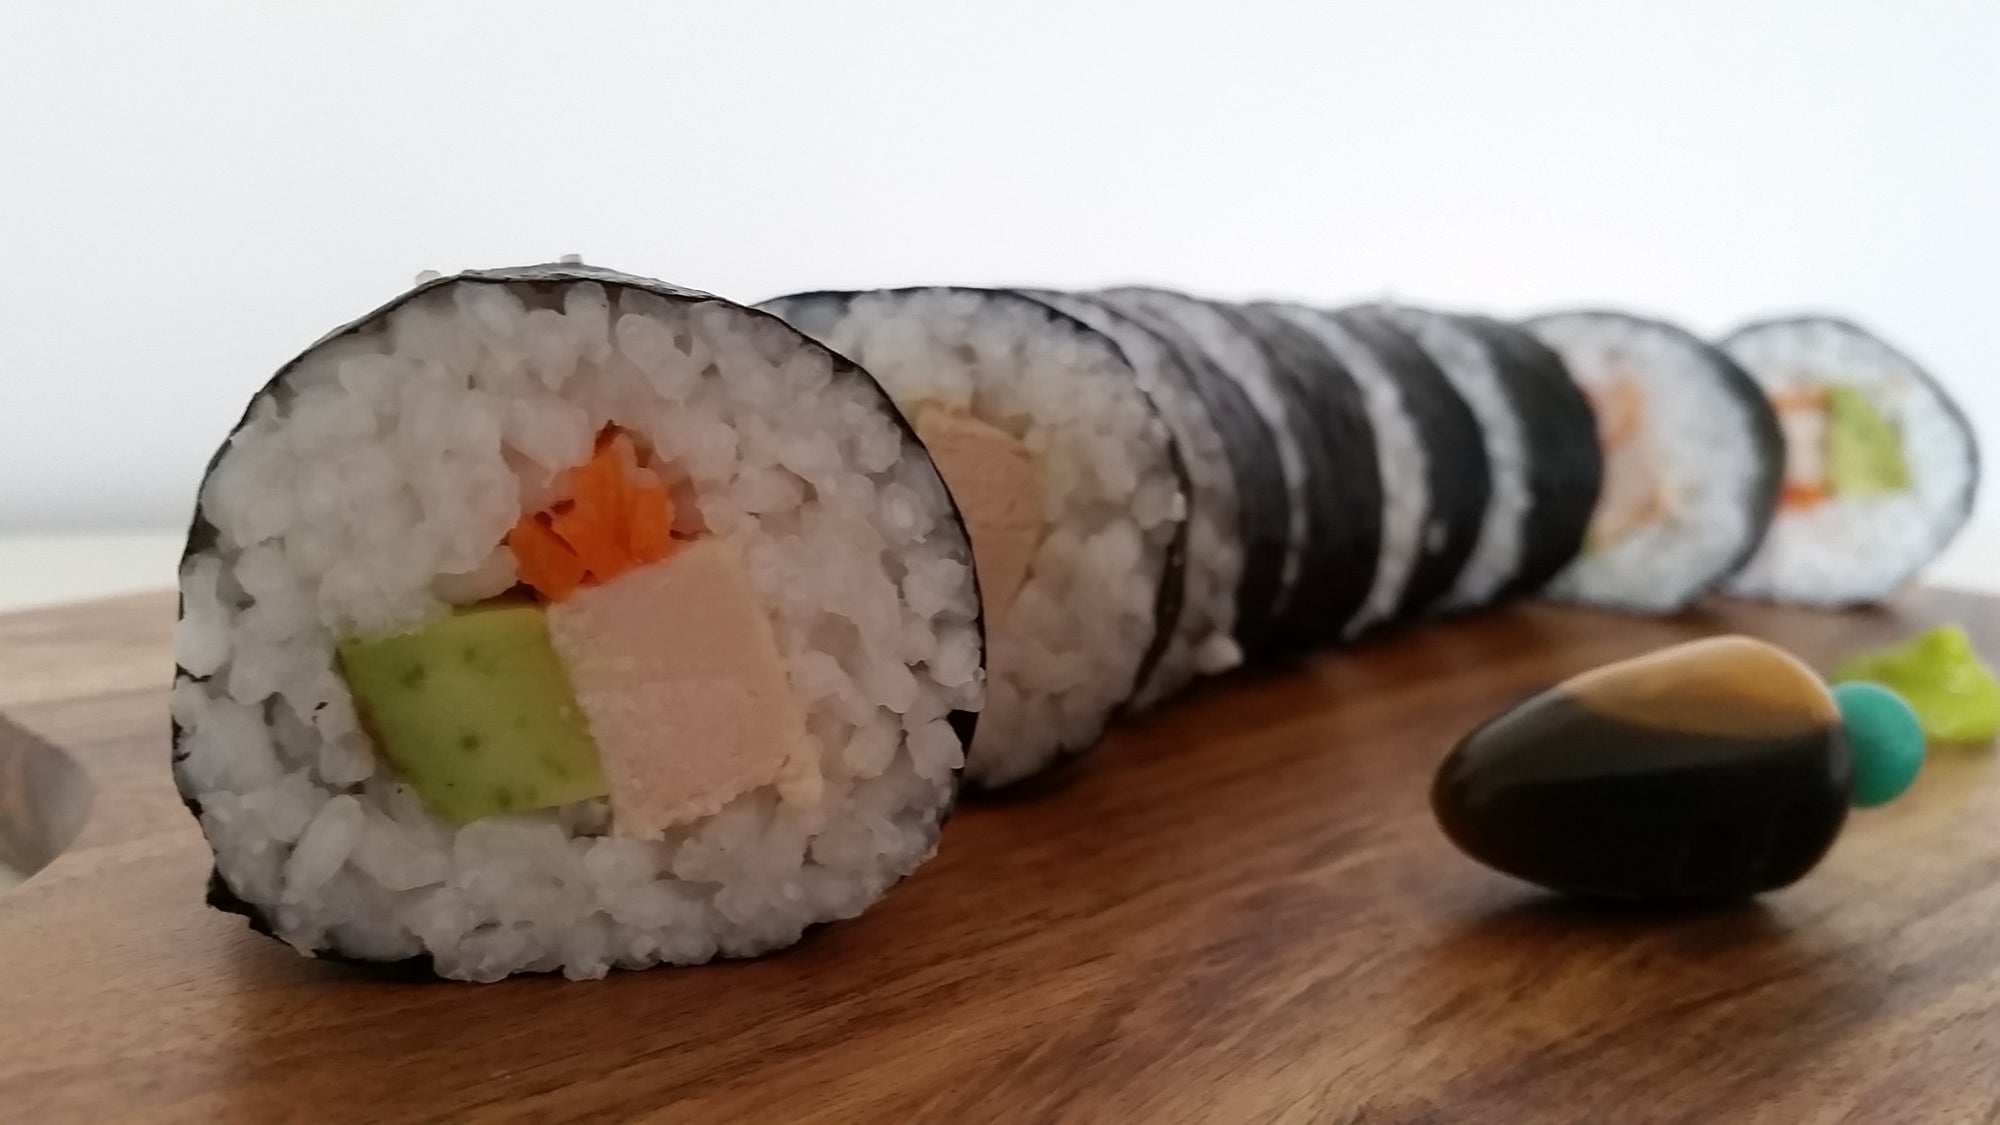 Simple Sushi